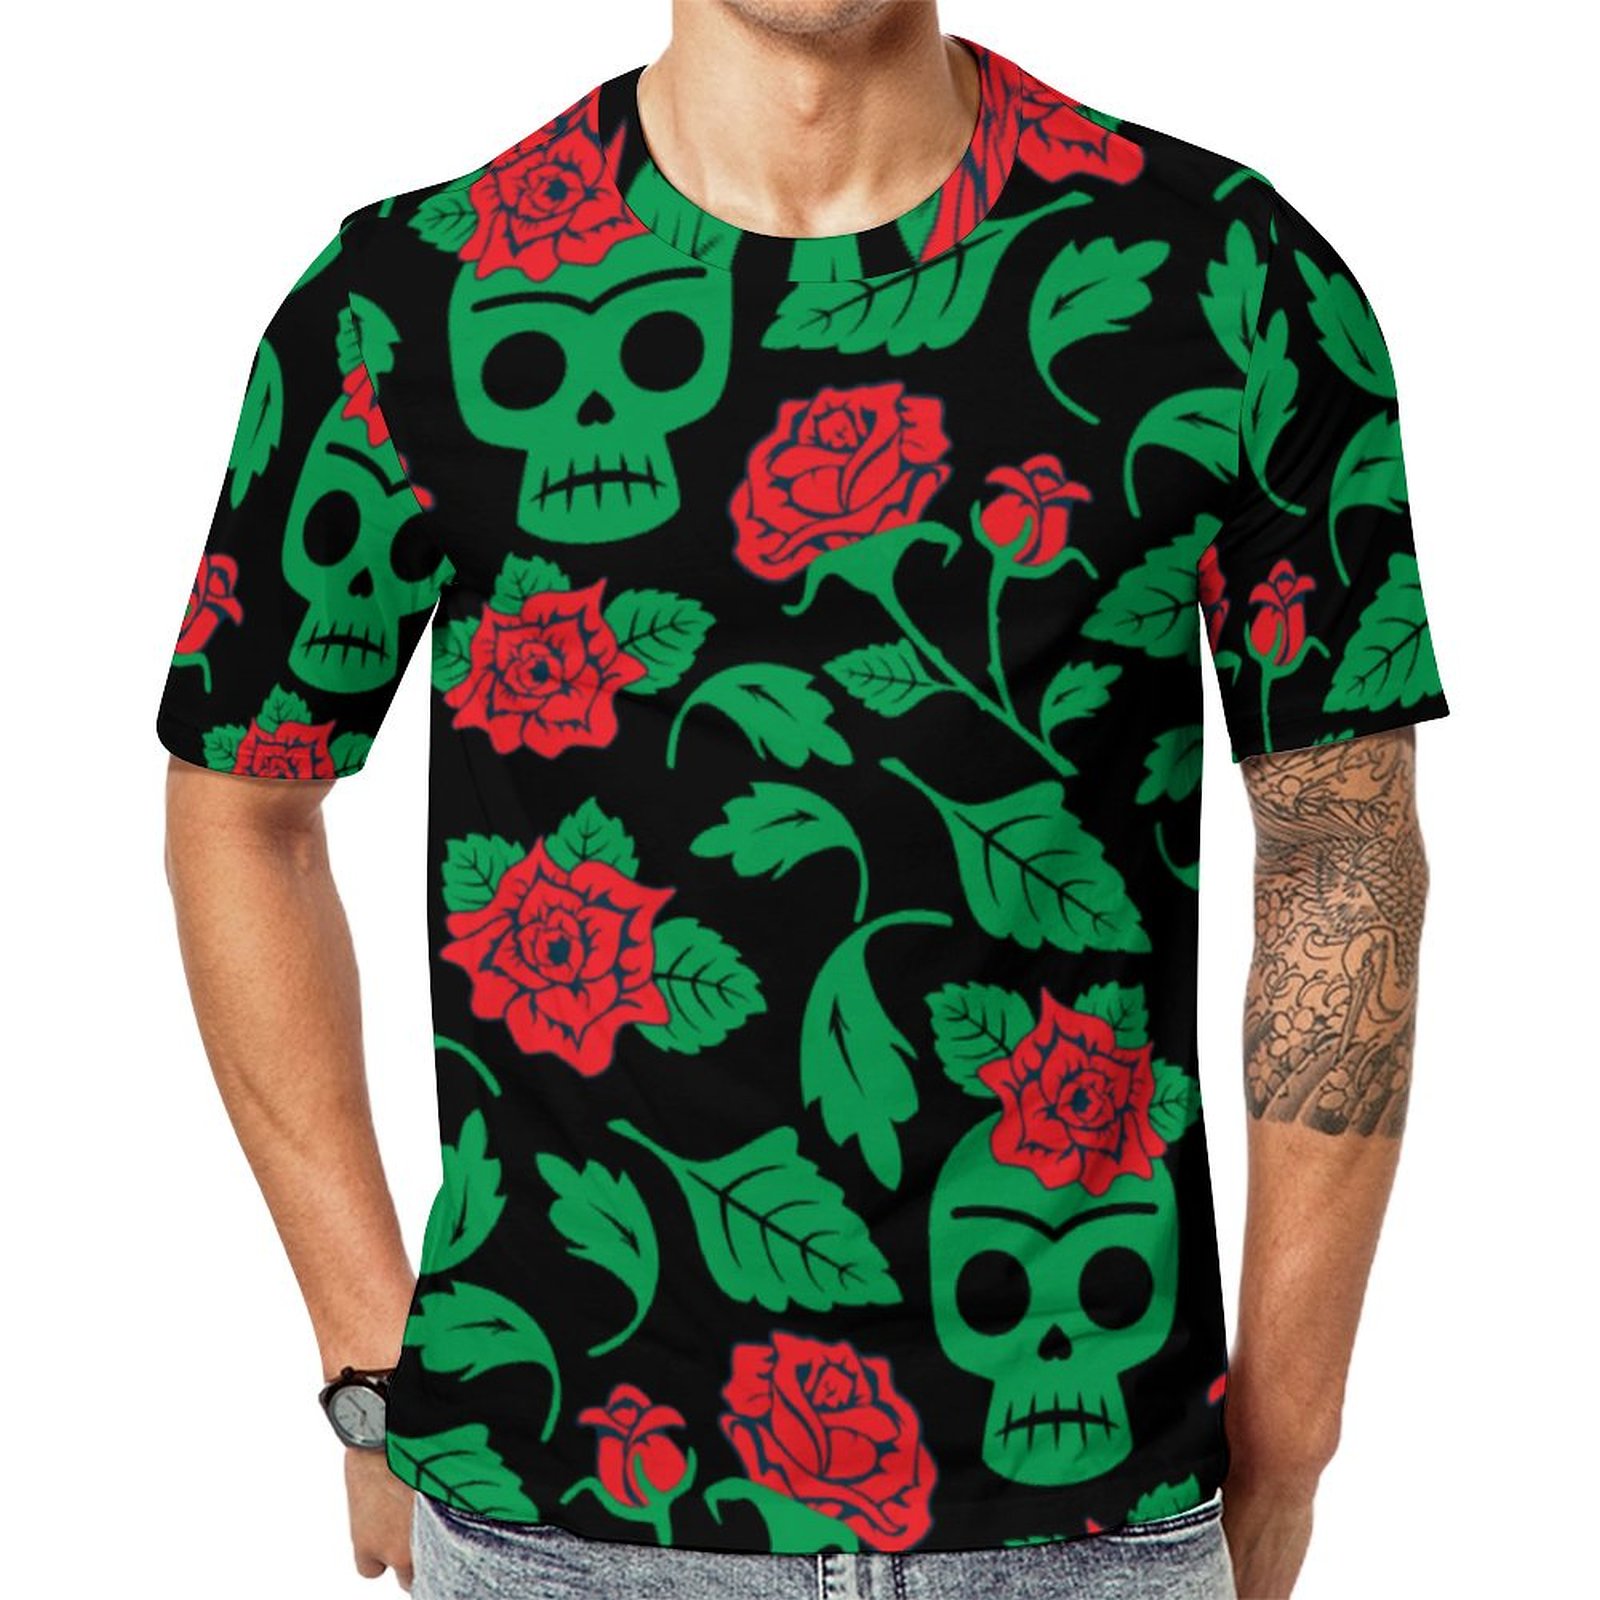 Frida Kahlo Skulls Roses Short Sleeve Print Unisex Tshirt Summer Casual Tees for Men and Women Coolcoshirts